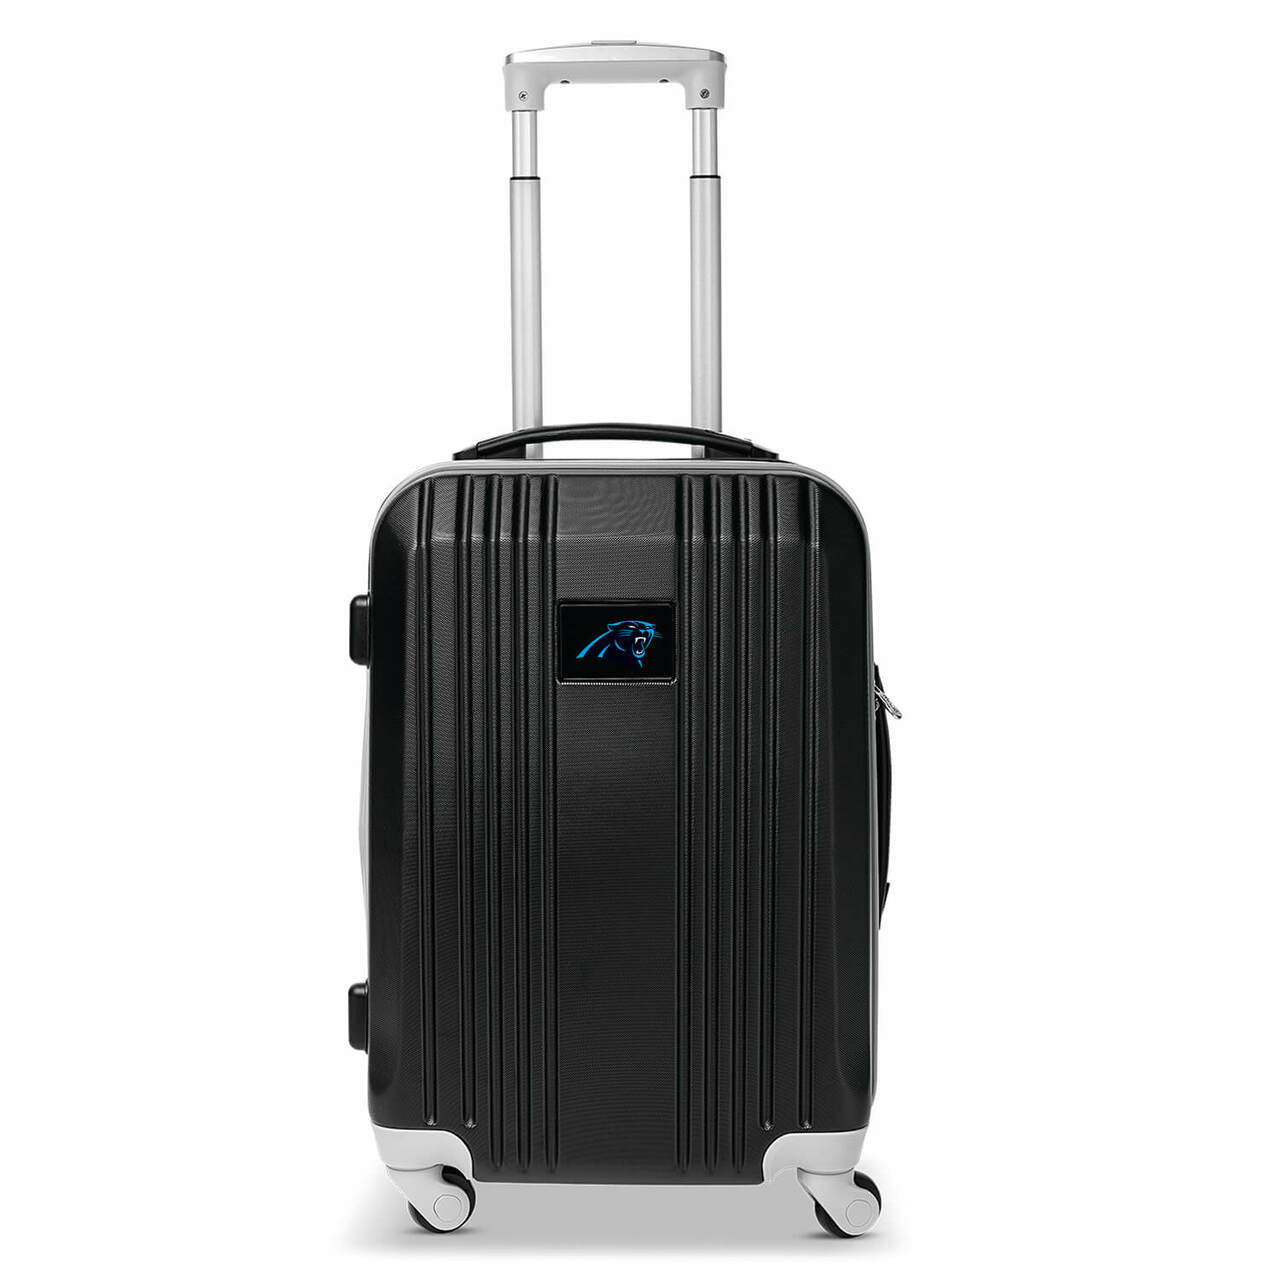 Panthers Carry On Spinner Luggage | Carolina Panthers Hardcase Two-Tone Luggage Carry-on Spinner in Black